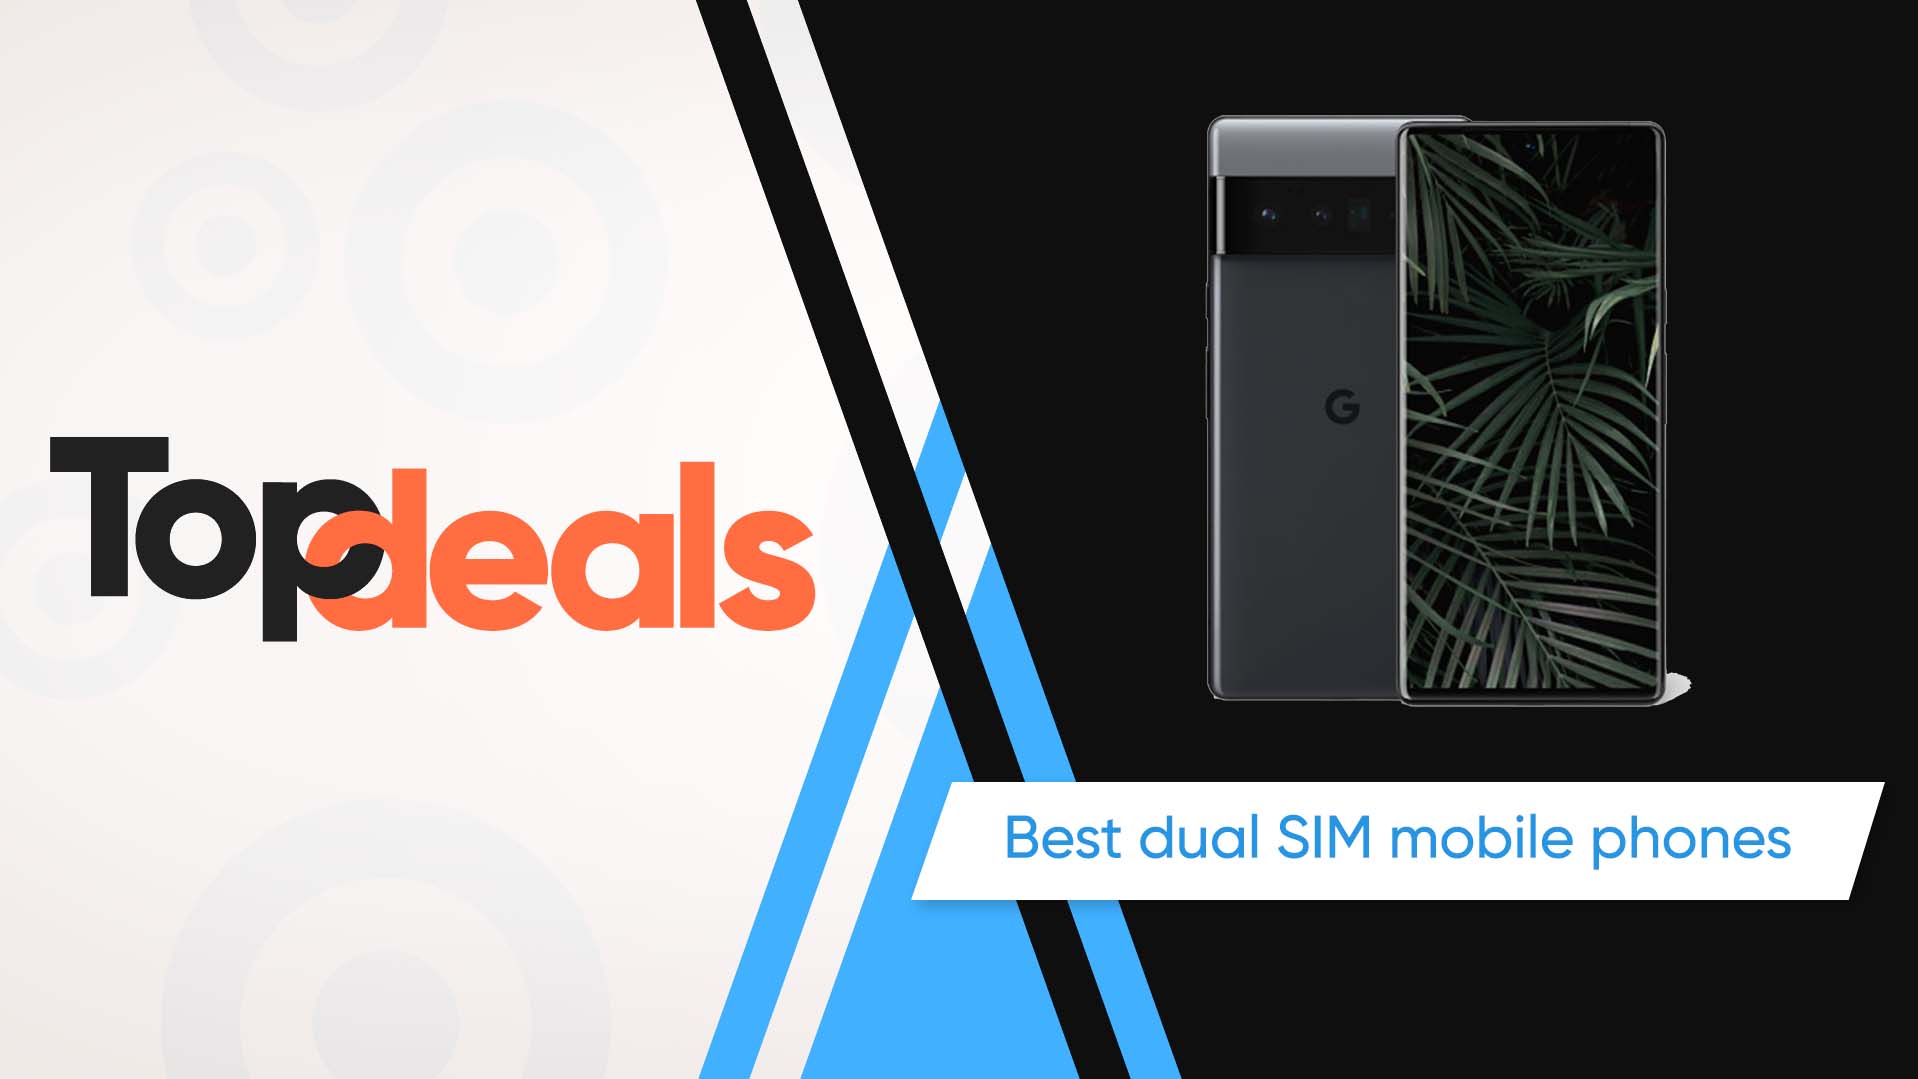 Best dual SIM mobile phones